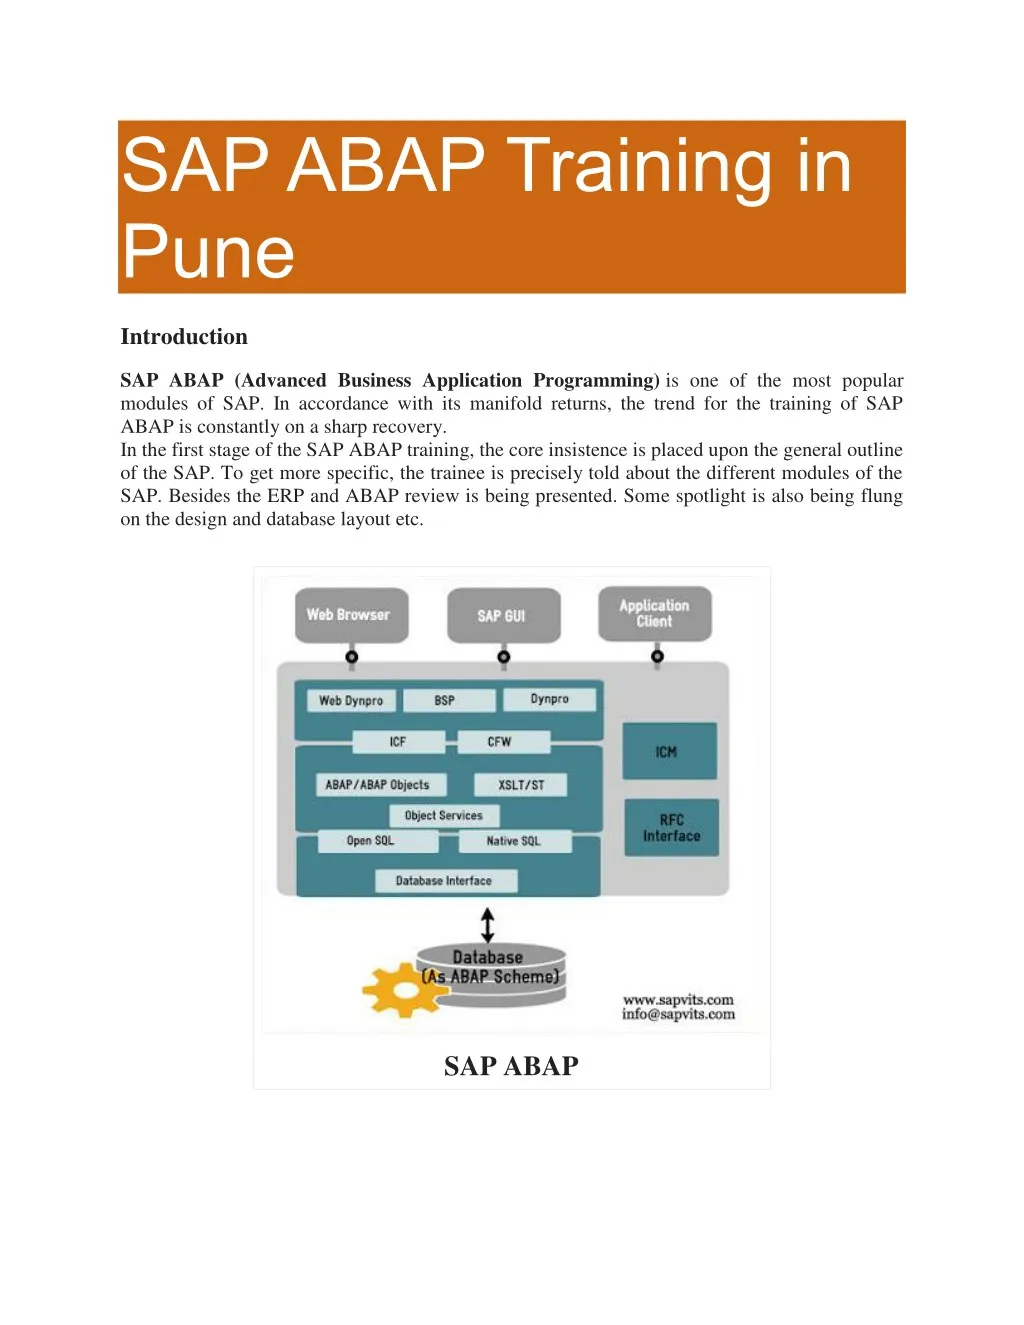 sap abap training in pune